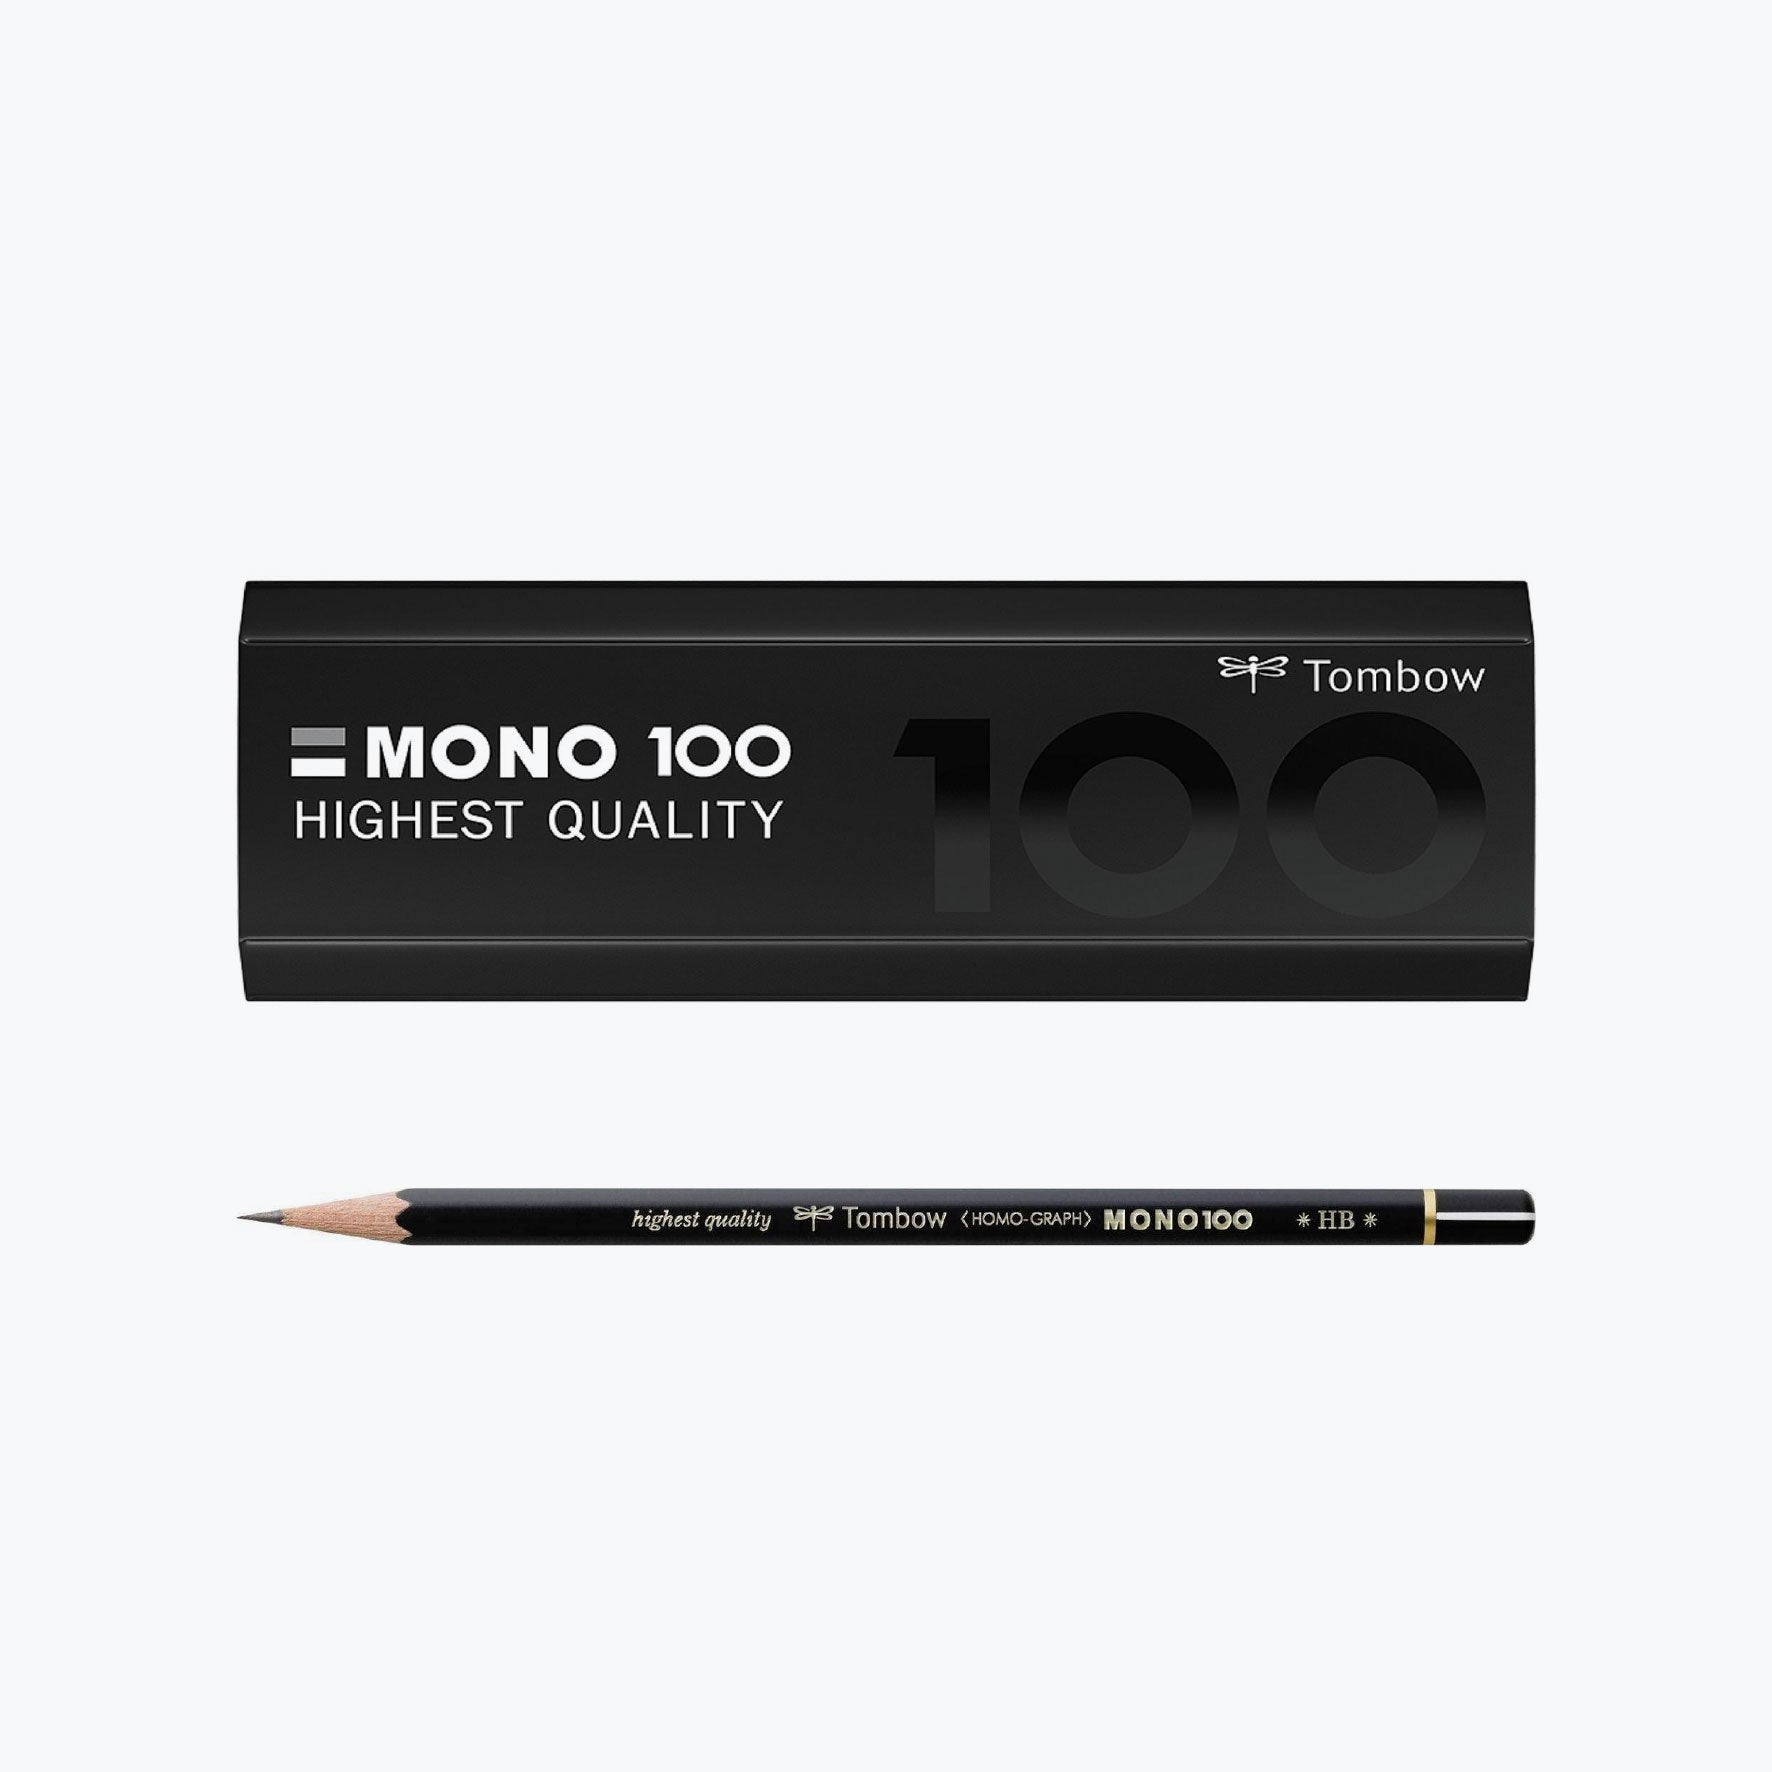 Tombow - Pencil - Mono 100 (Various Grades) - Box of 12